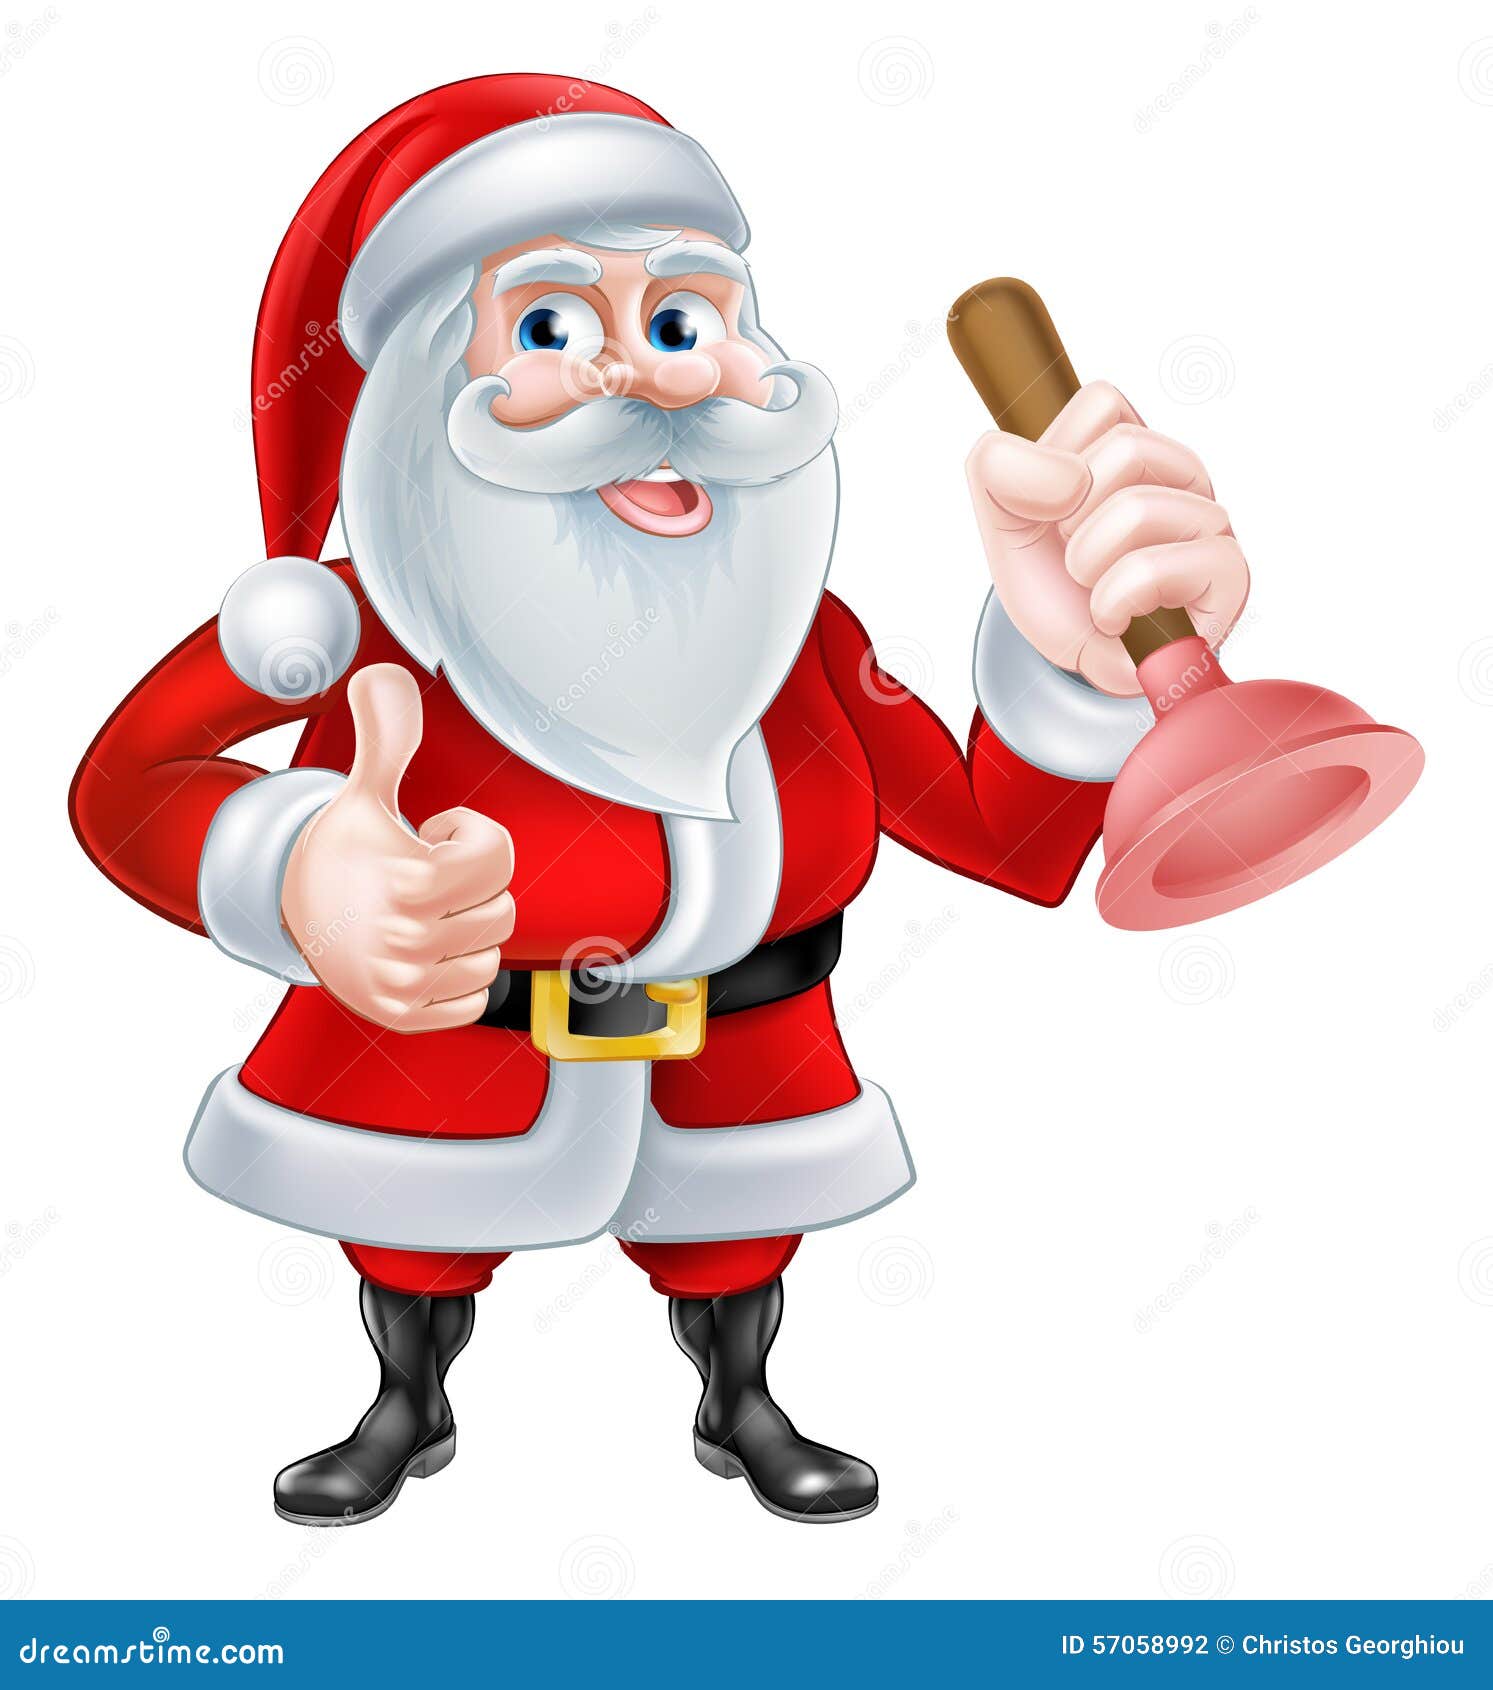 santa-plumber-christmas-cartoon-illustration-claus-holding-plunger-giving-thumbs-up-57058992.jpg